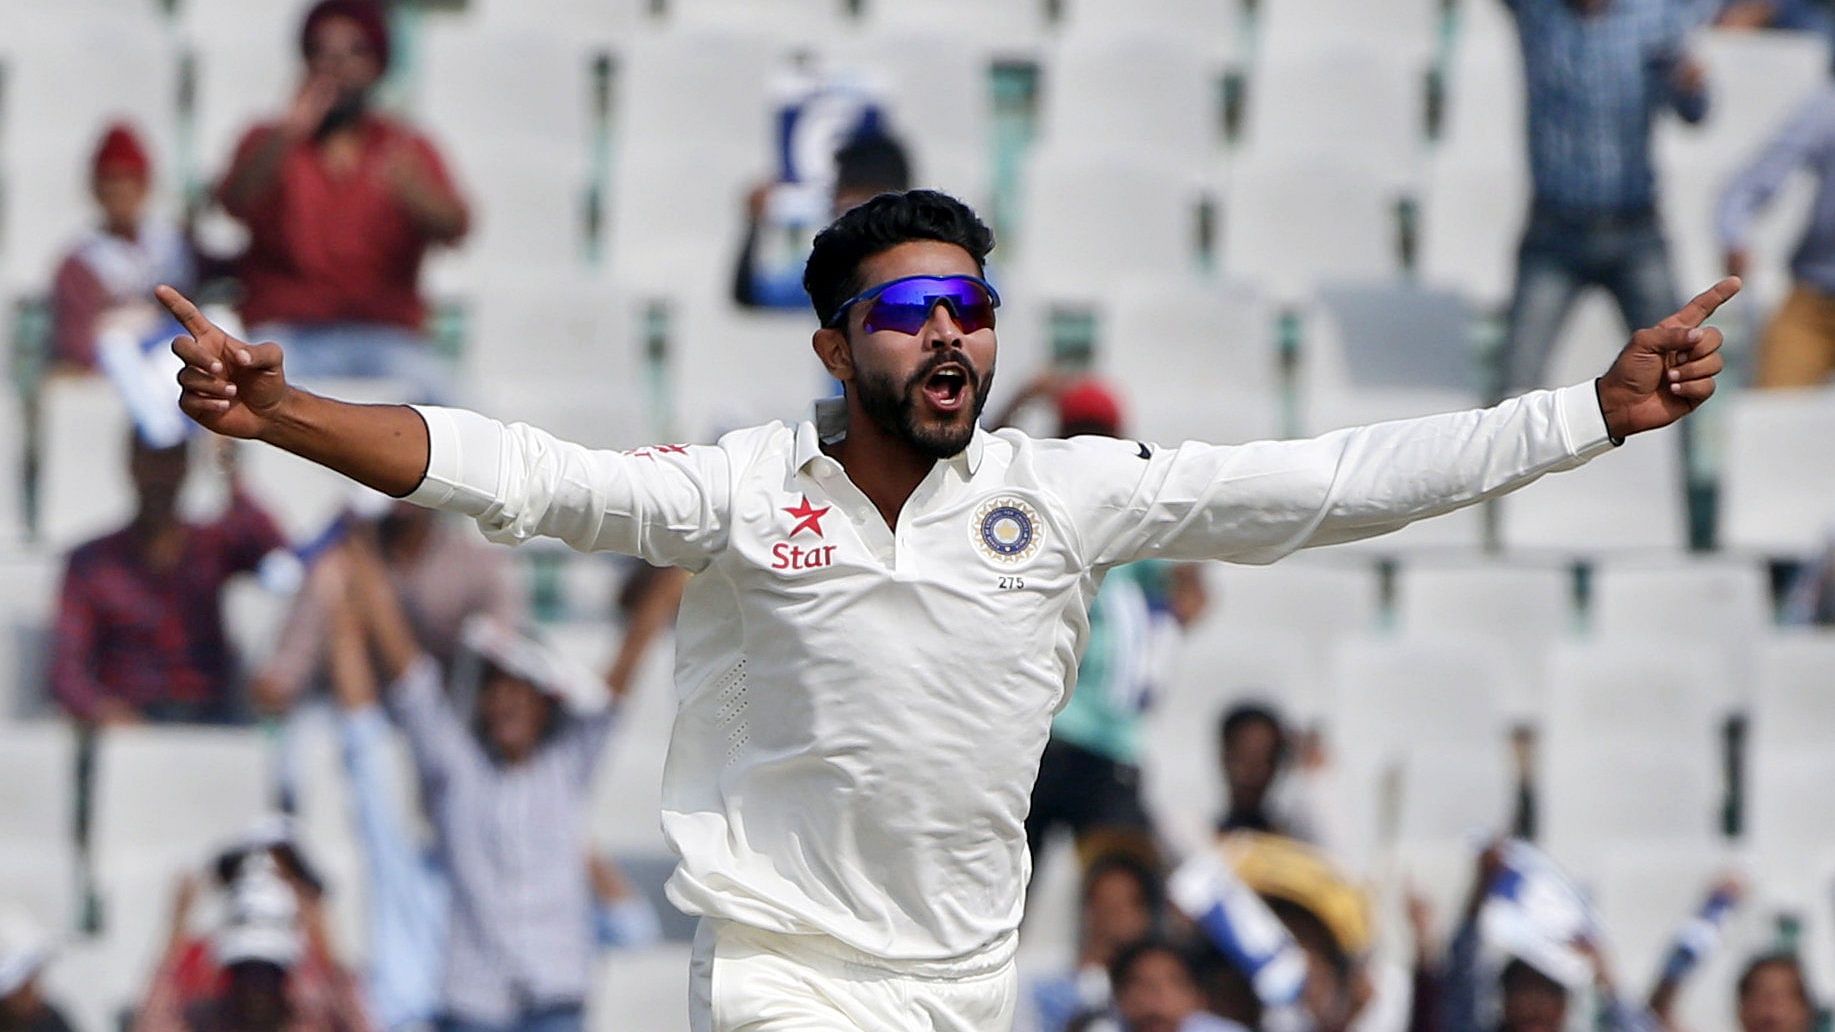 Ravindra Jadeja celebrates after picking up Dane Vilas’ wicket. (Photo: AP)